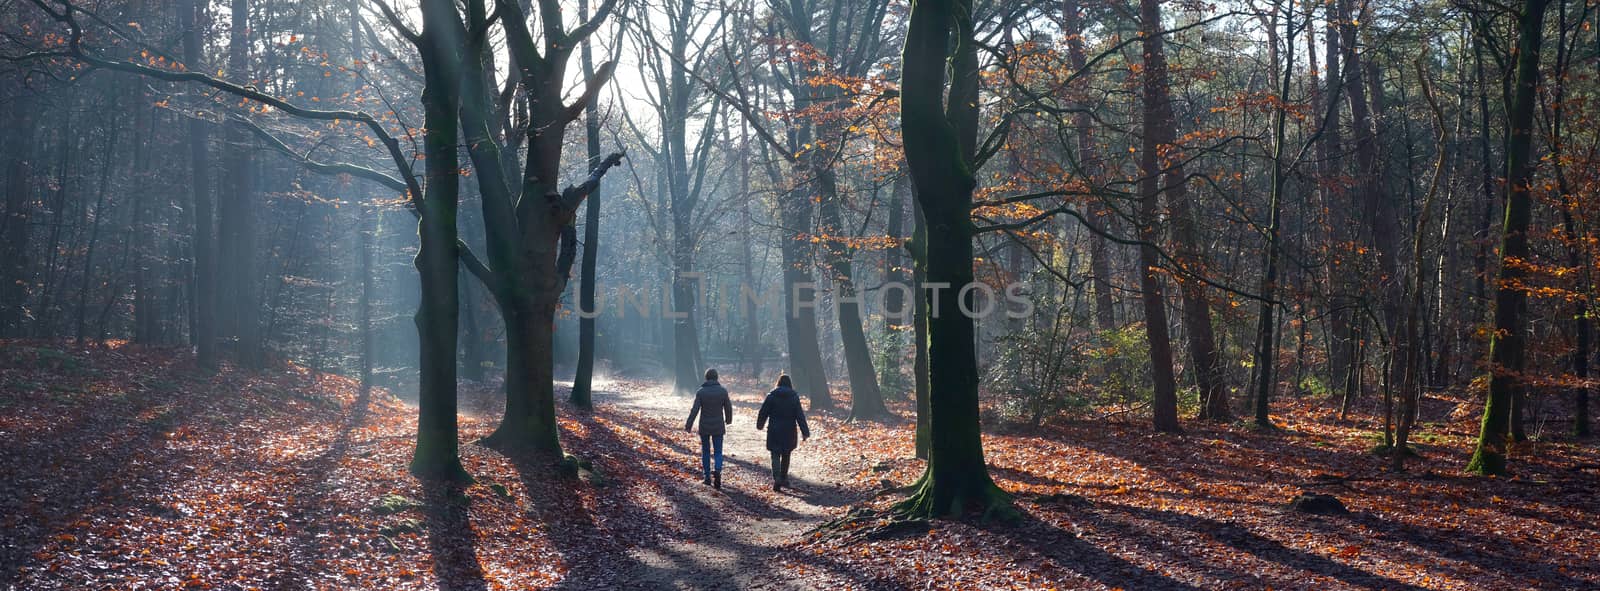 two women walk in autumn forest near doorn on utrechtse heuvelrug in the netherlands by ahavelaar